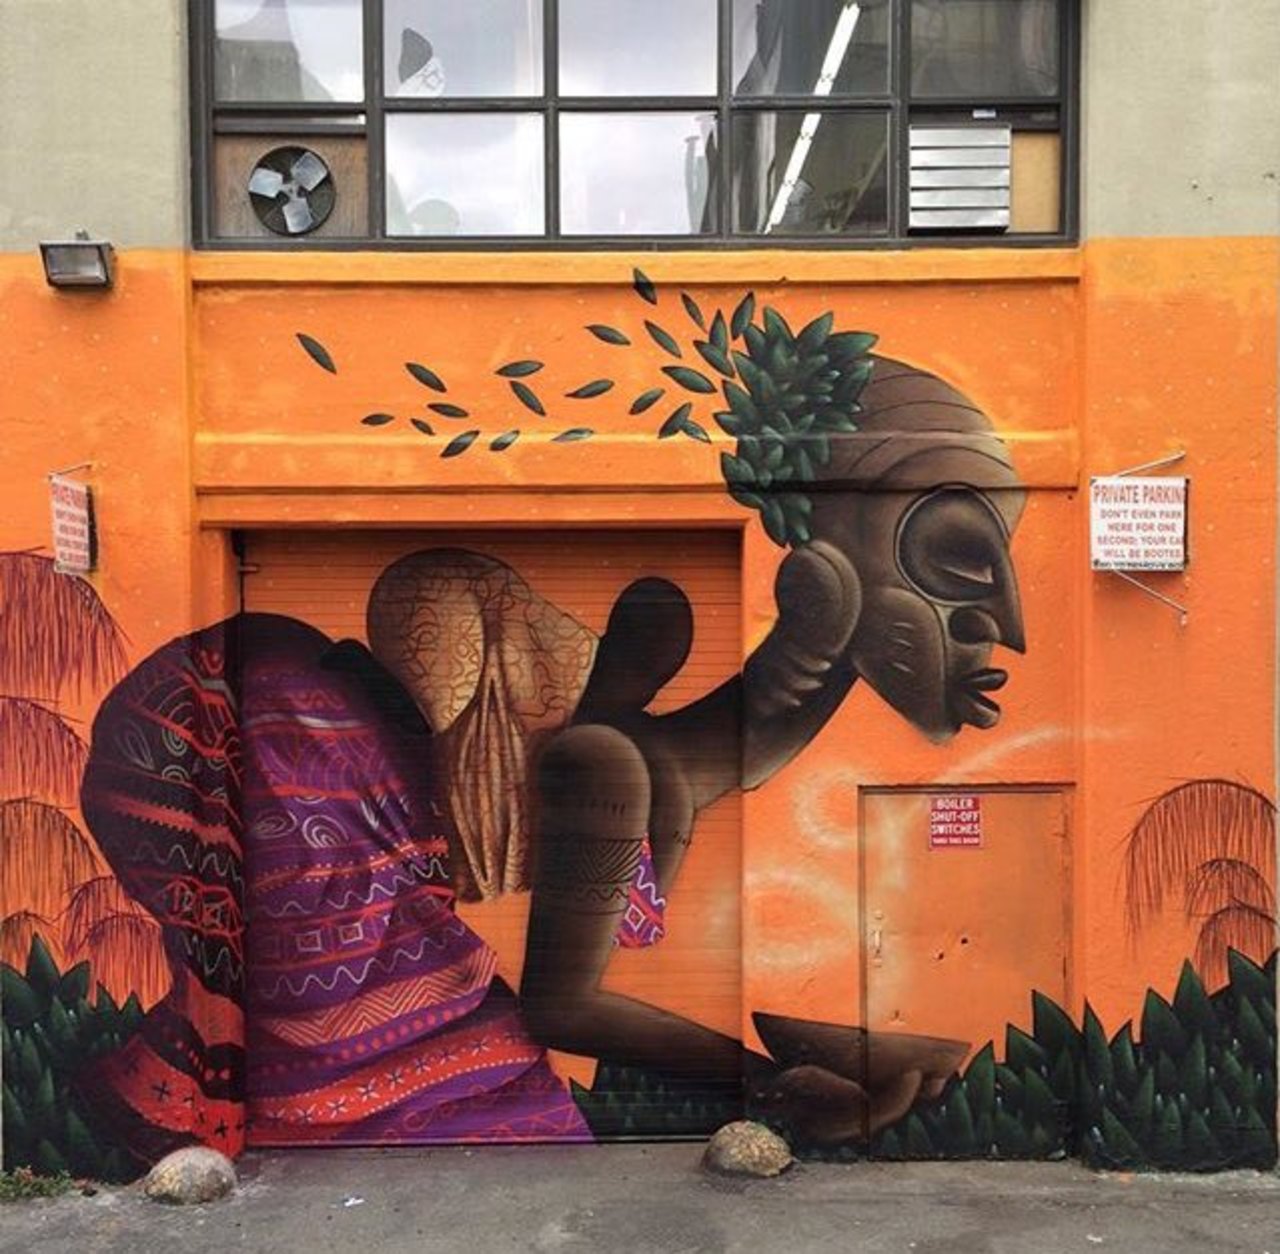 New Street Art by Alexandre Keto in NYC 

#art #graffiti #mural #streetart https://t.co/nXFfx24LR7